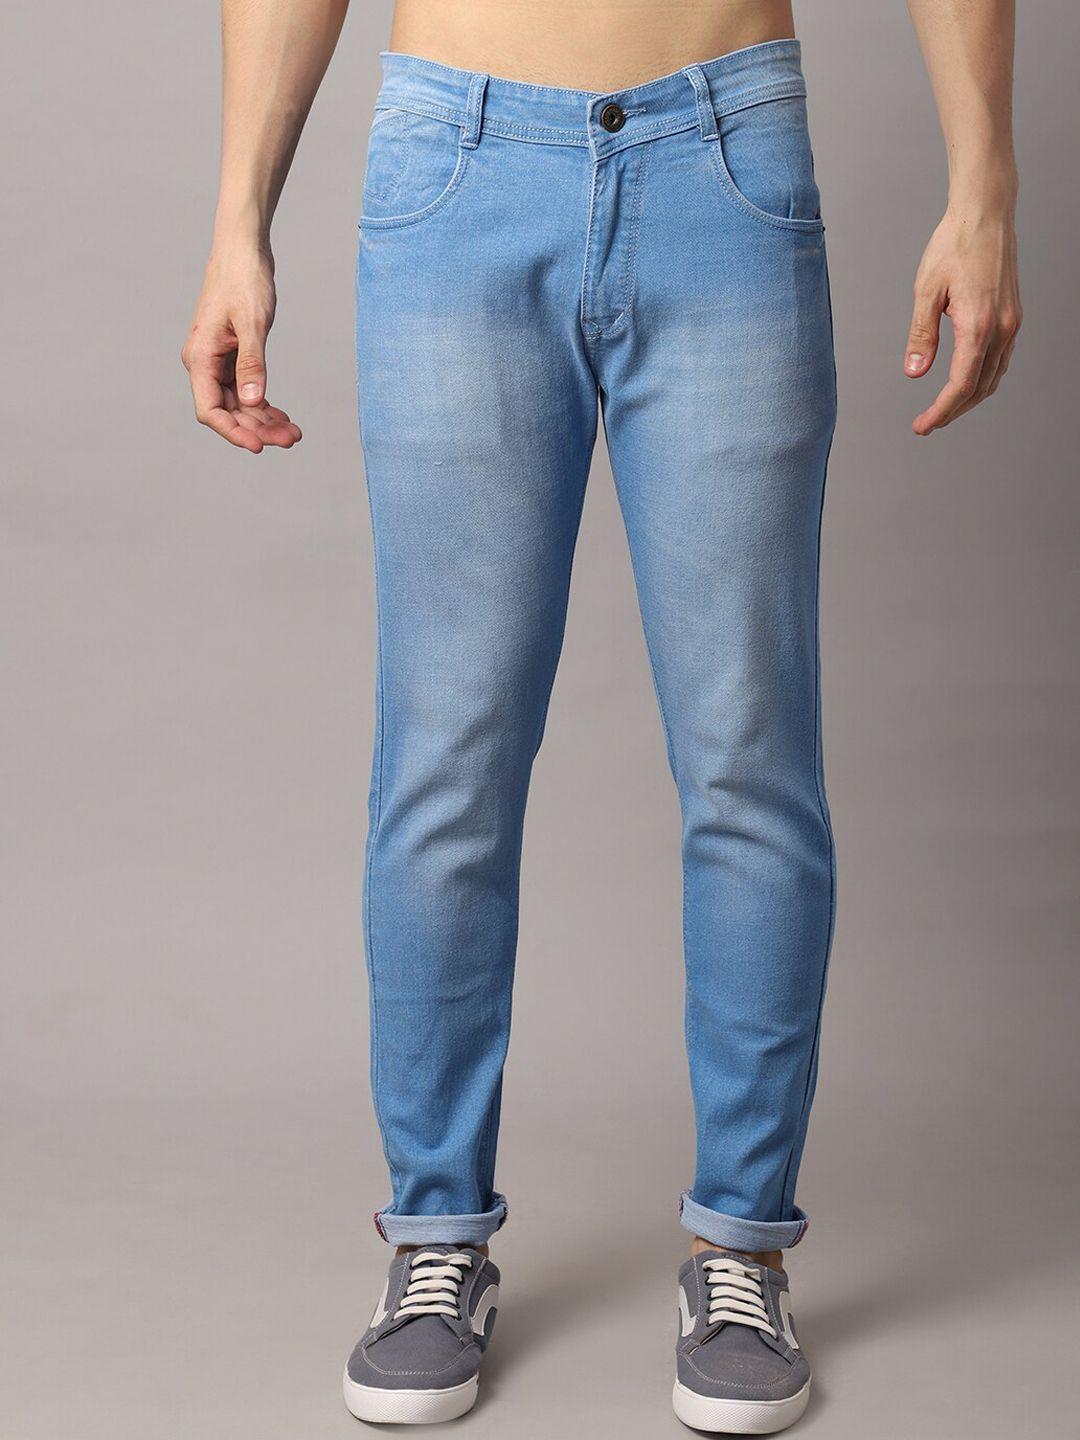 rodamo-men-blue-slim-fit-light-fade-stretchable-jeans